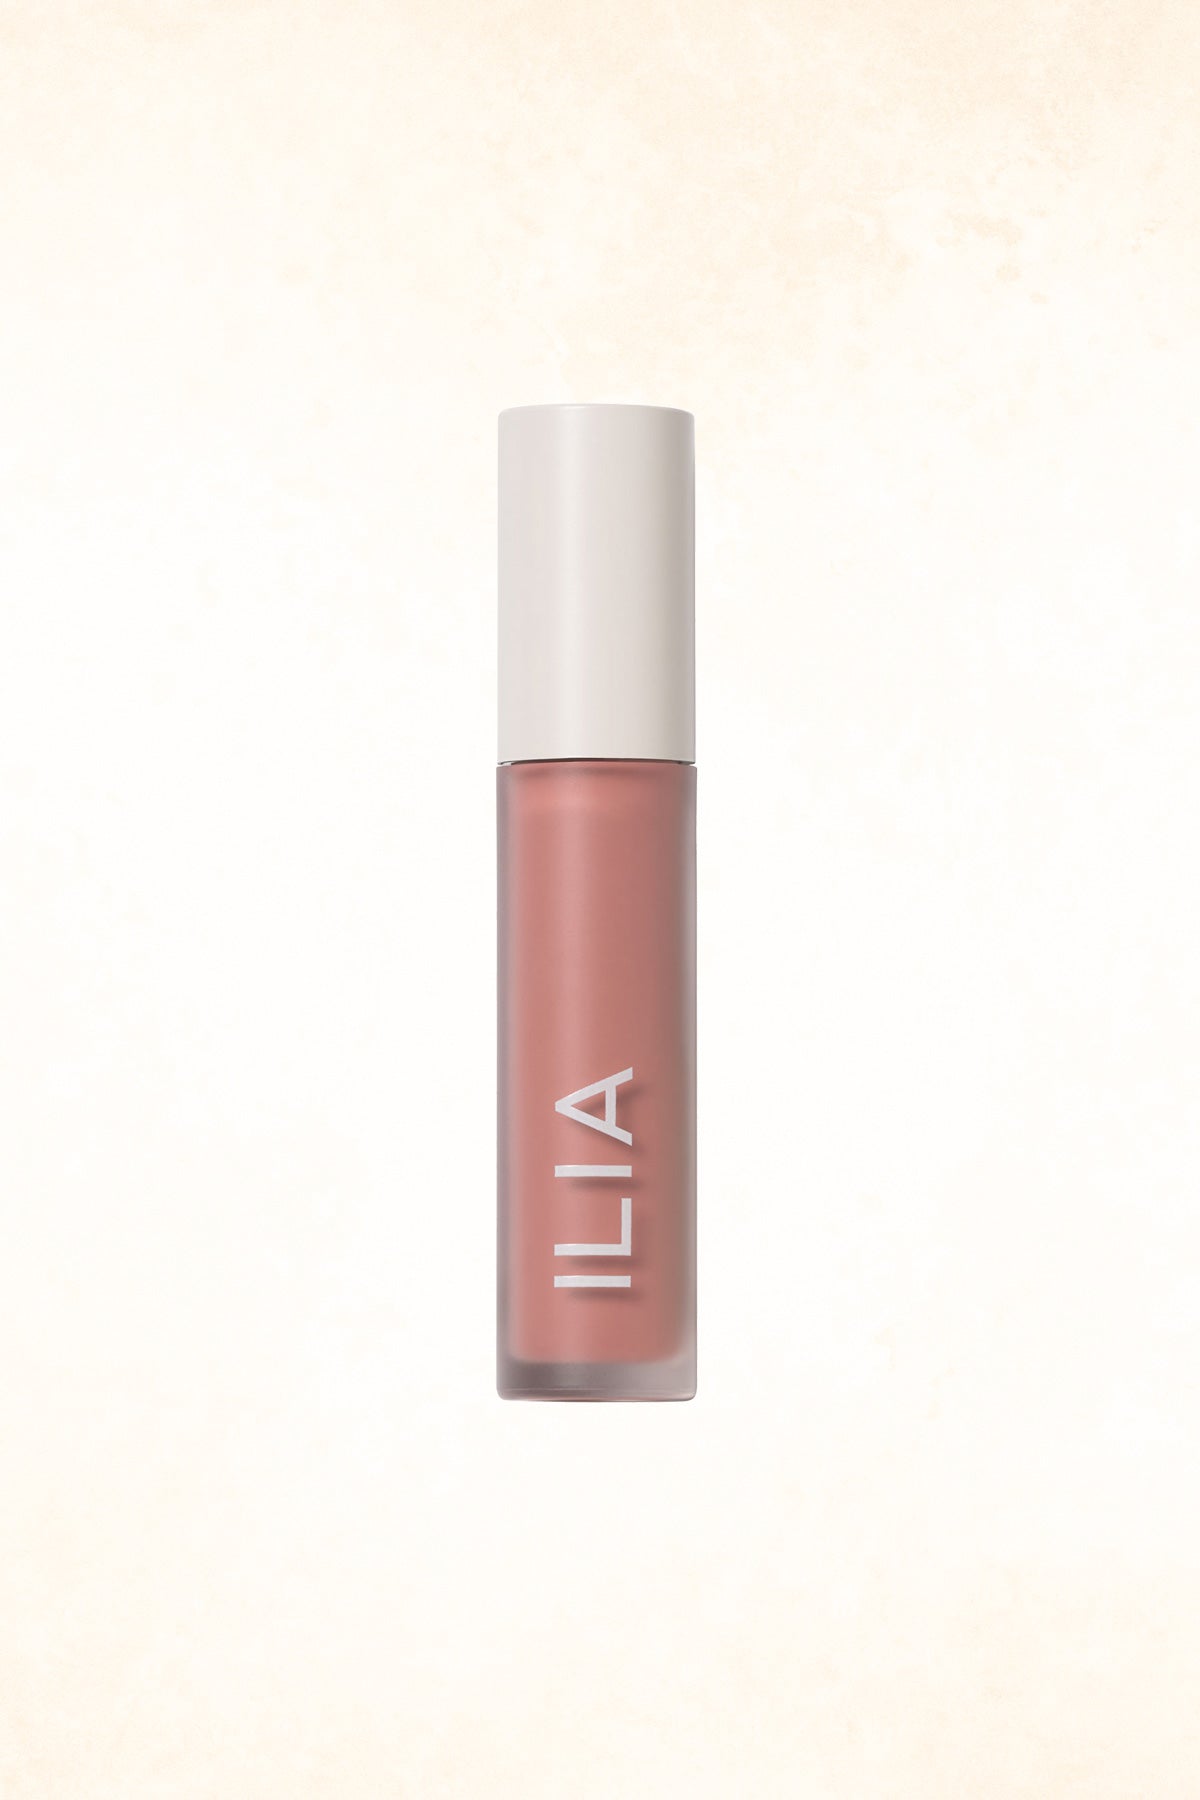 ILIA – Only You – Balmy Gloss Tinted Lip Oil